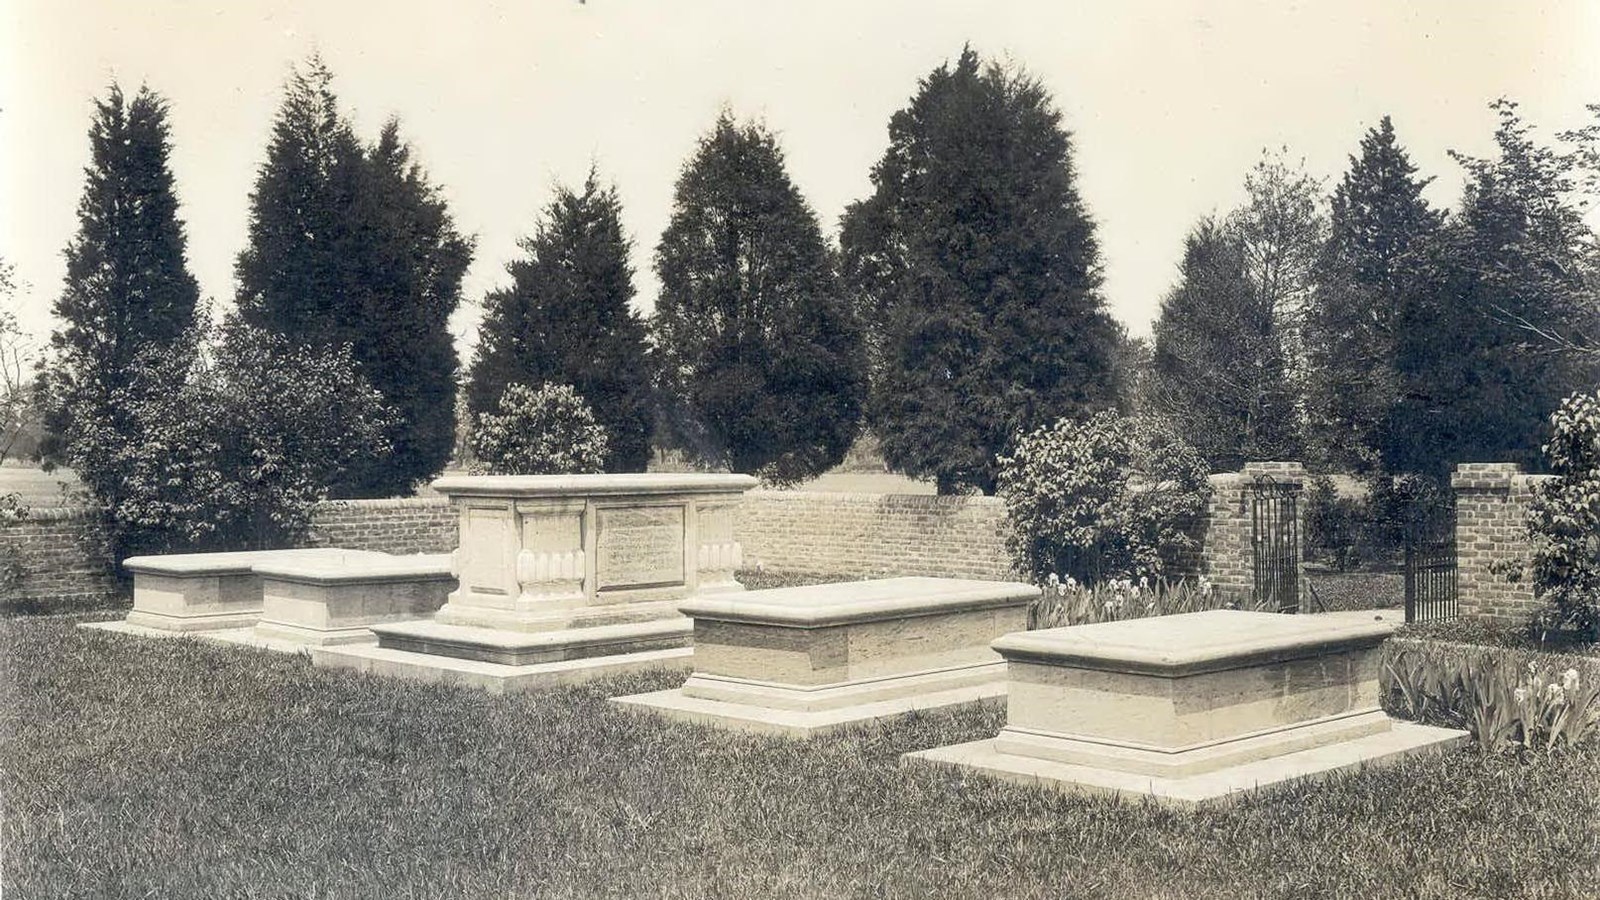 The Washington Family Burial Ground (U.S. National Park Service)